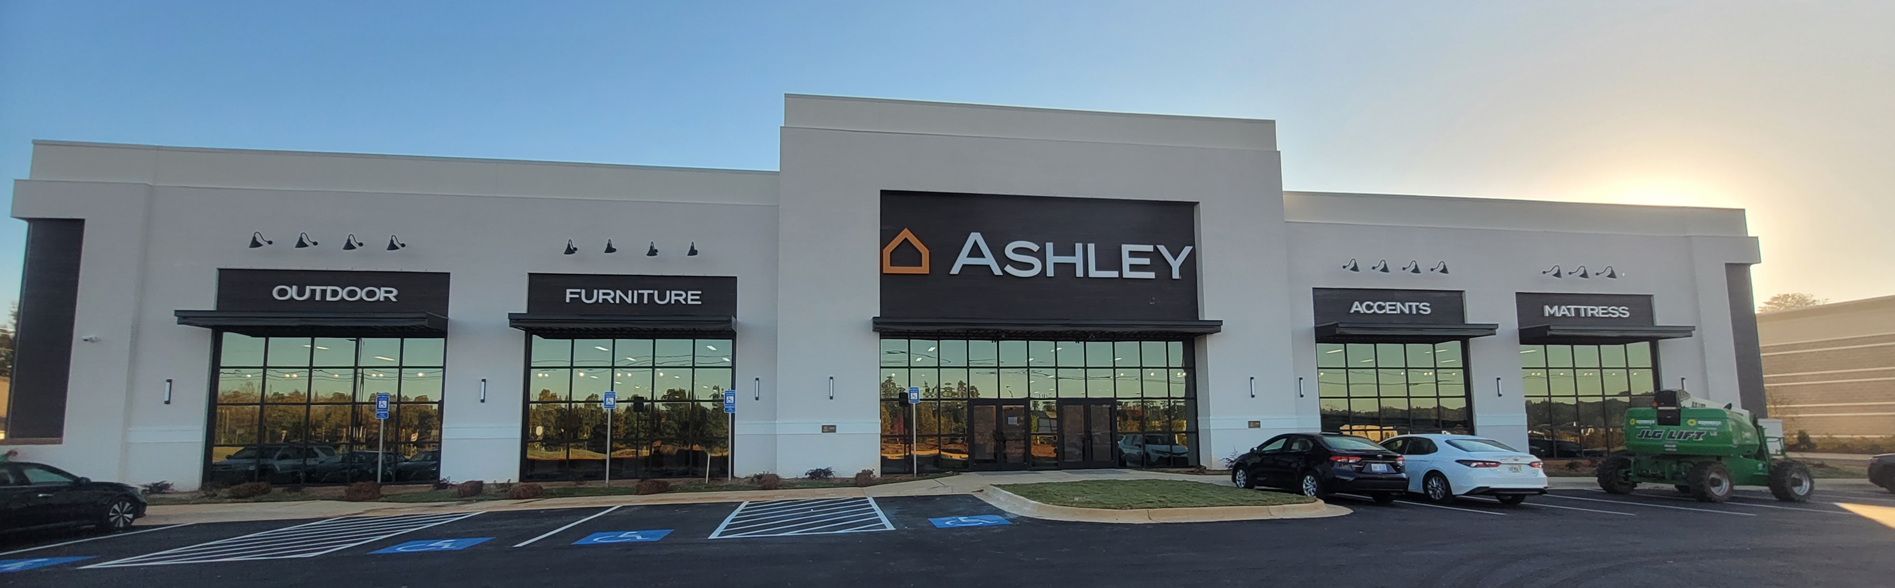 Ashley Companies